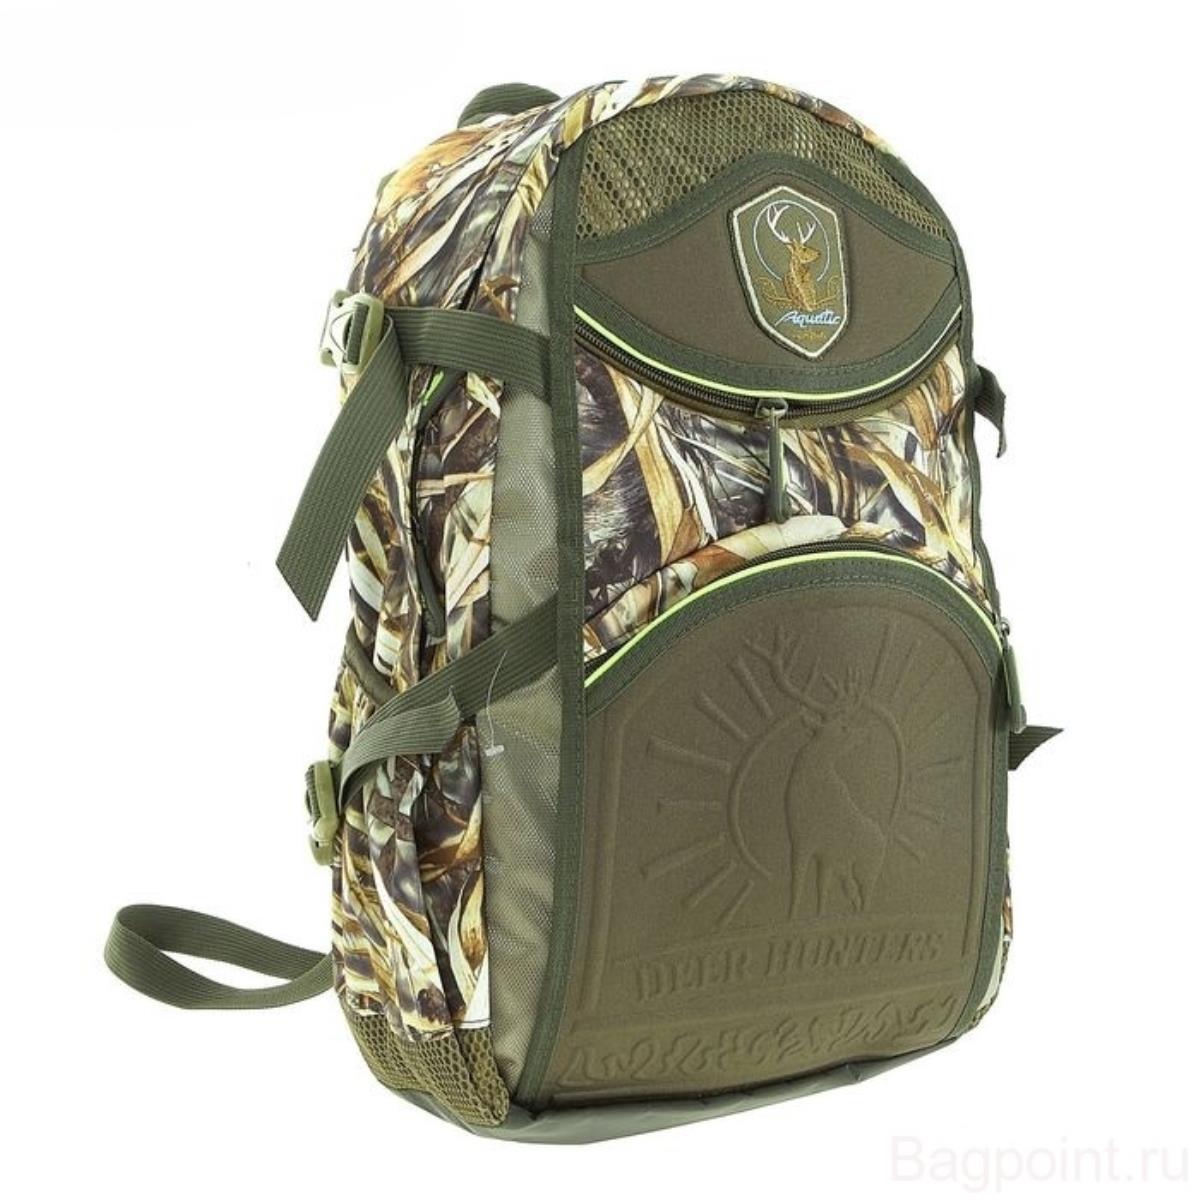 Рюкзак для охоты 32л (РО-32) Aquatic рюкзак со светоотражающим карманом future is now